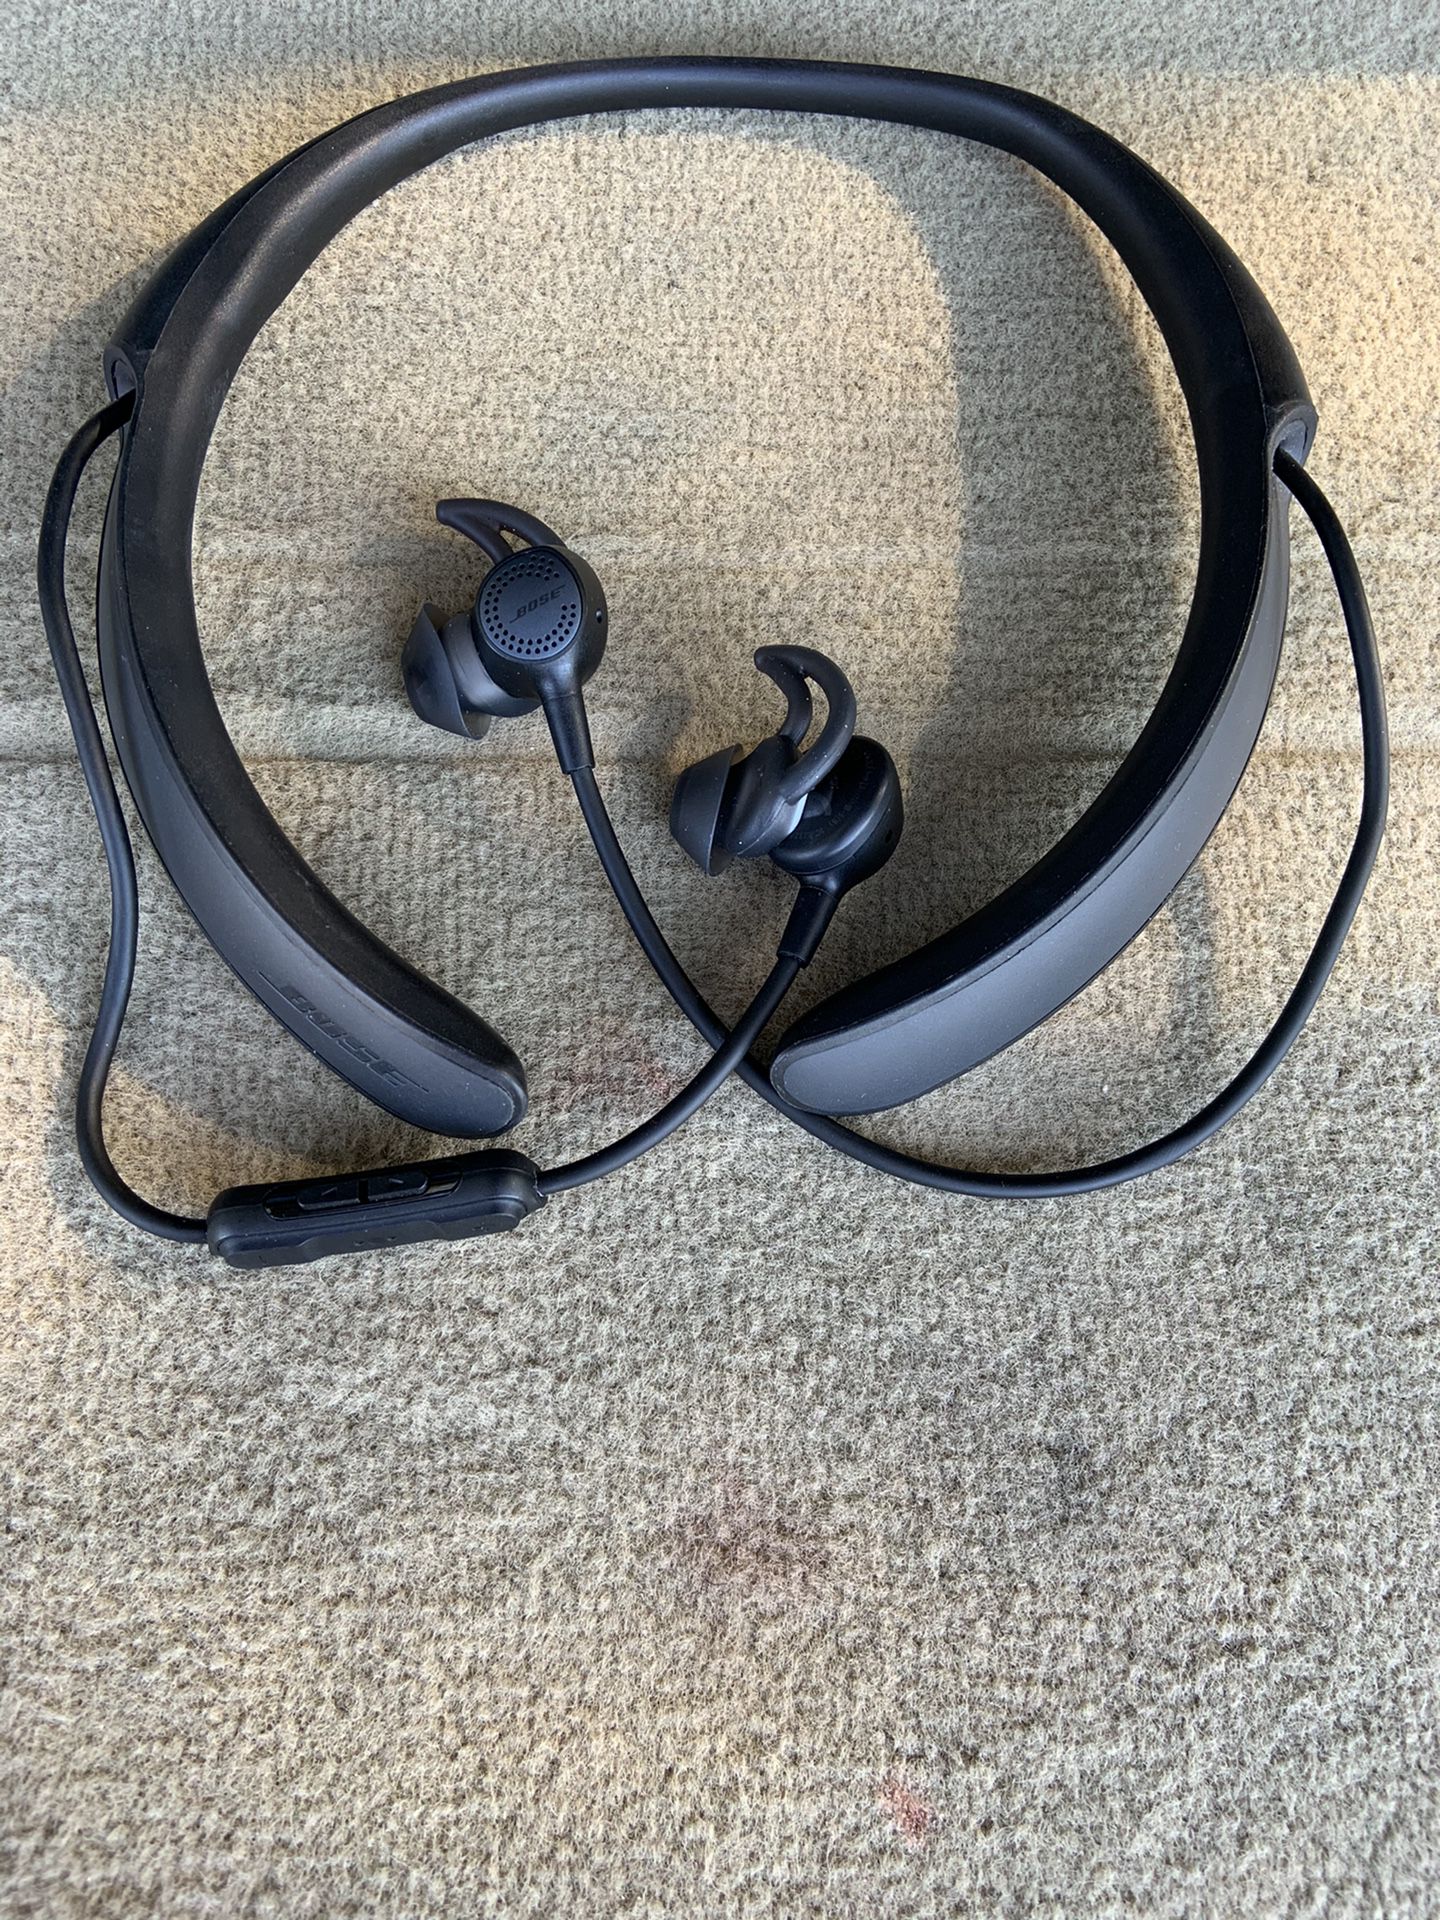 Bose QC 30 earbuds headphones